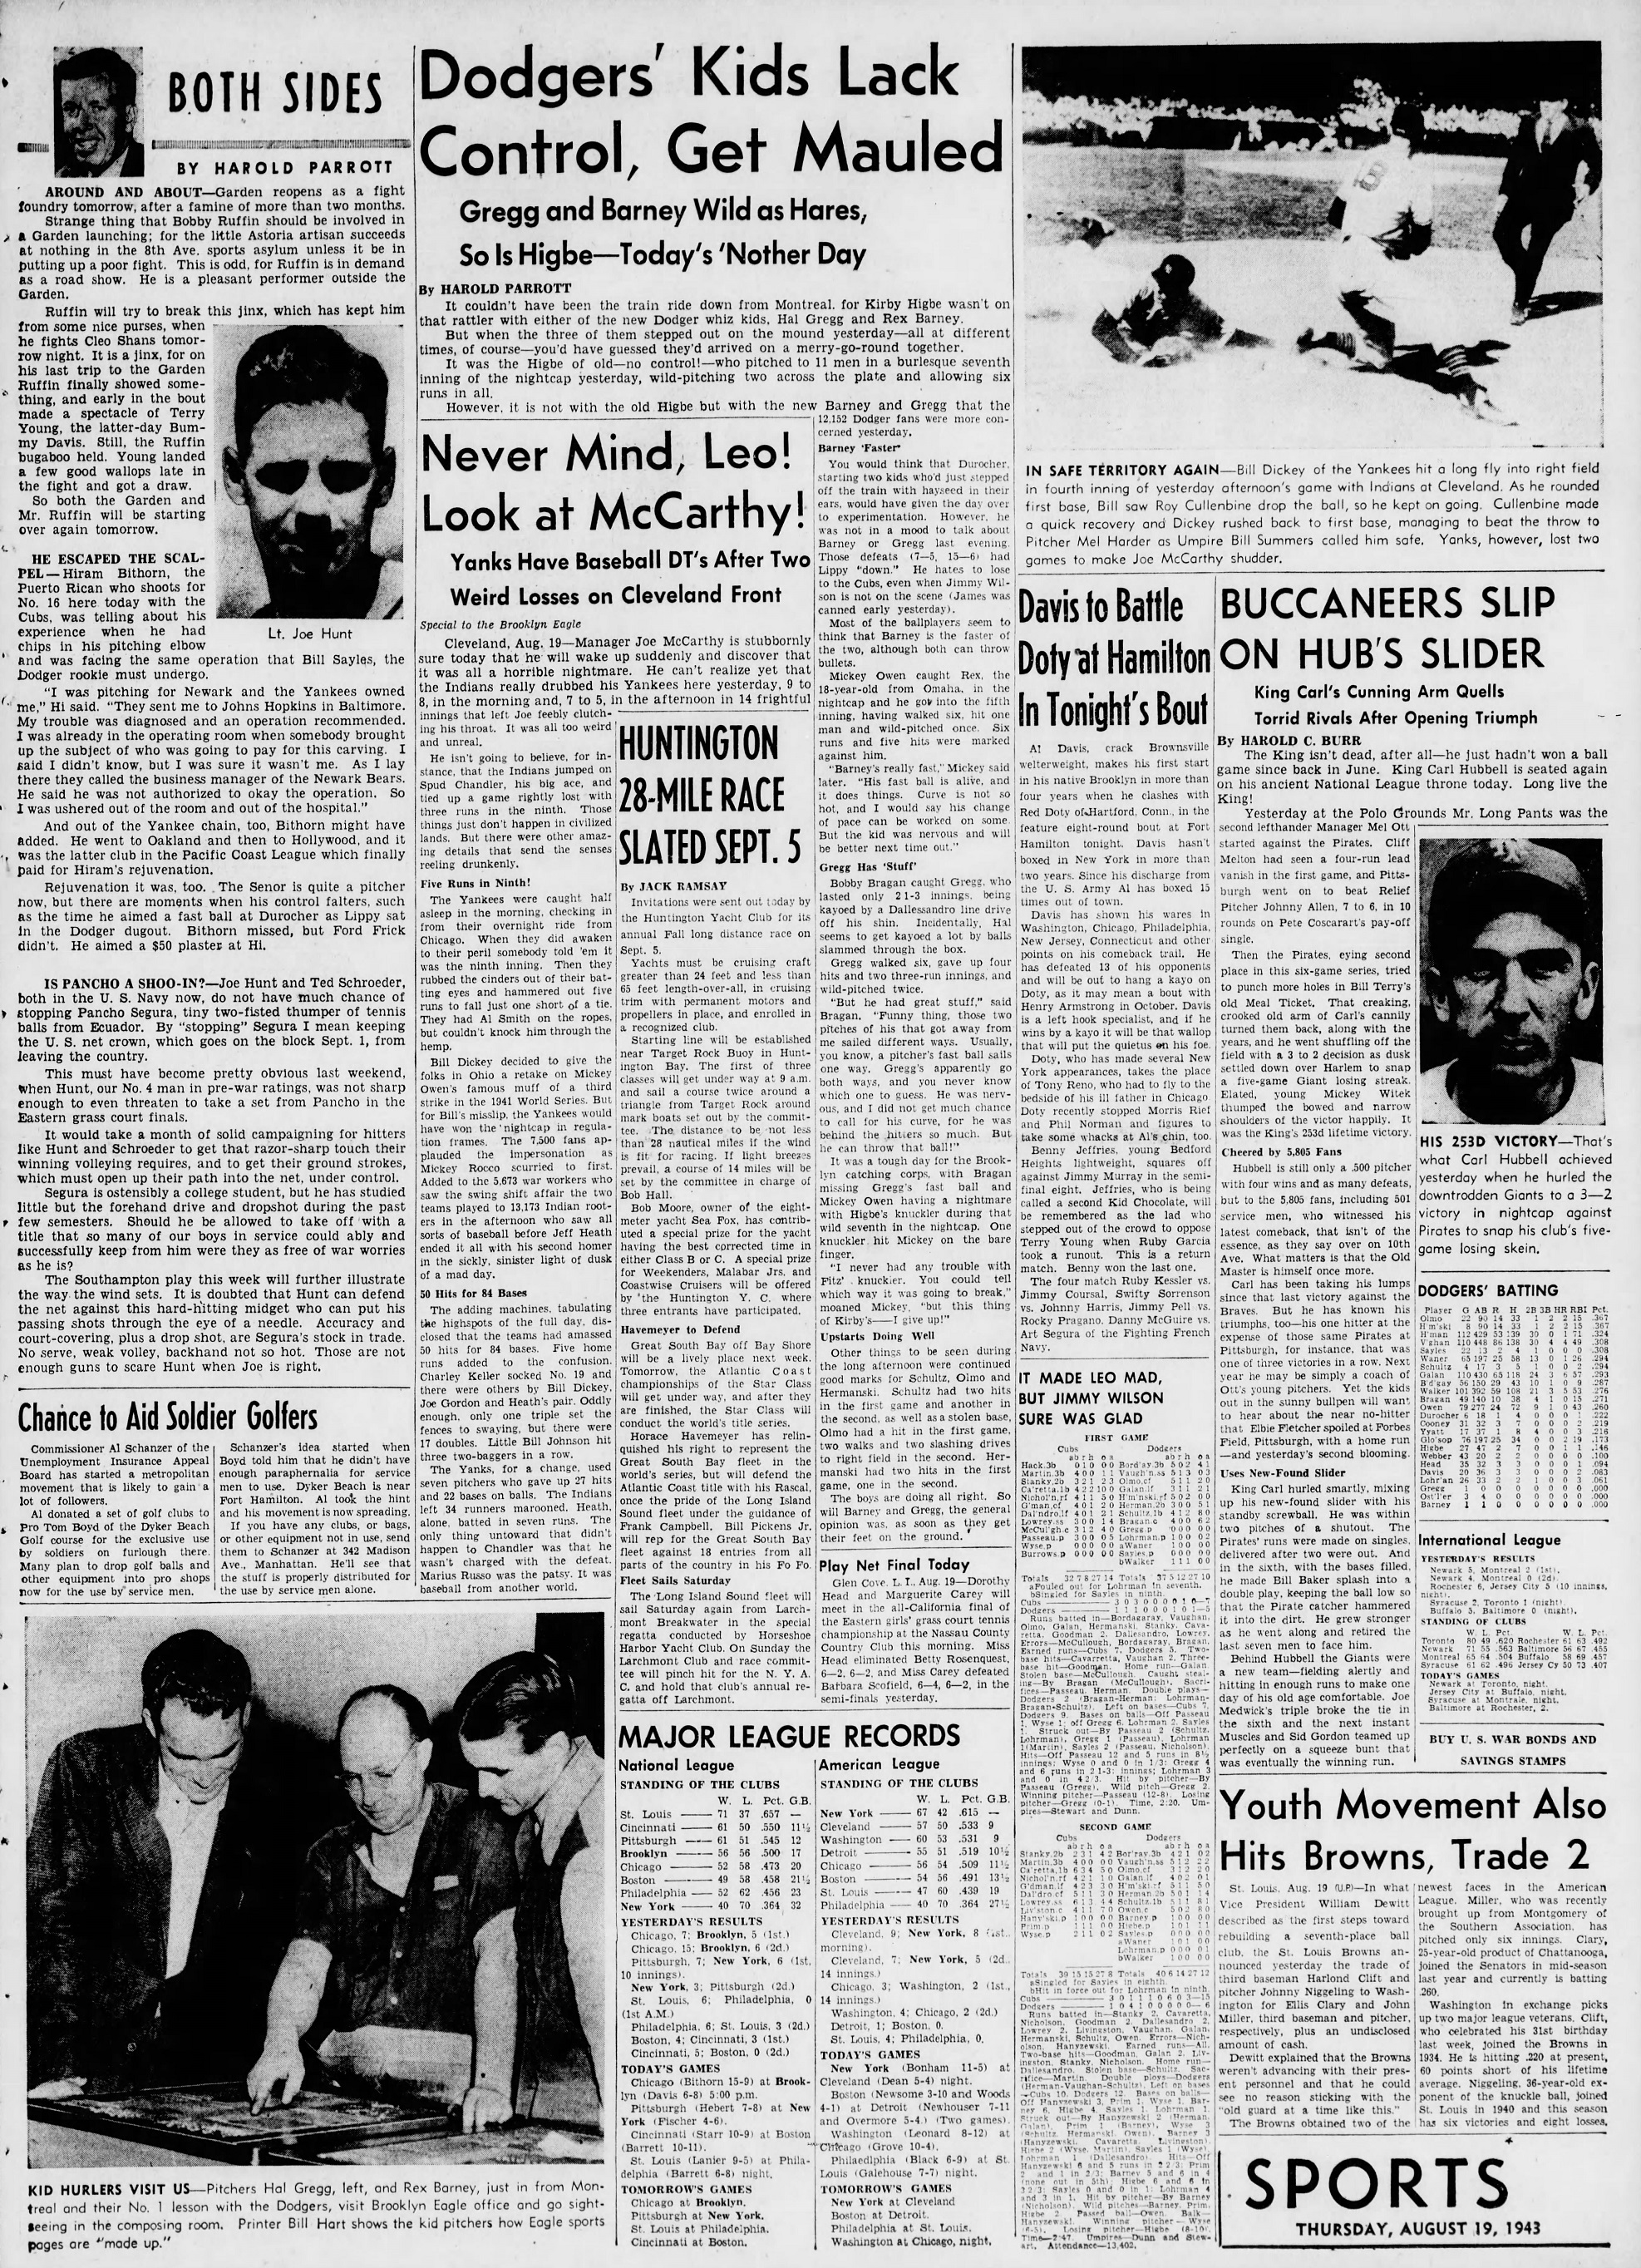 The_Brooklyn_Daily_Eagle_Thu__Aug_19__1943_(4).jpg